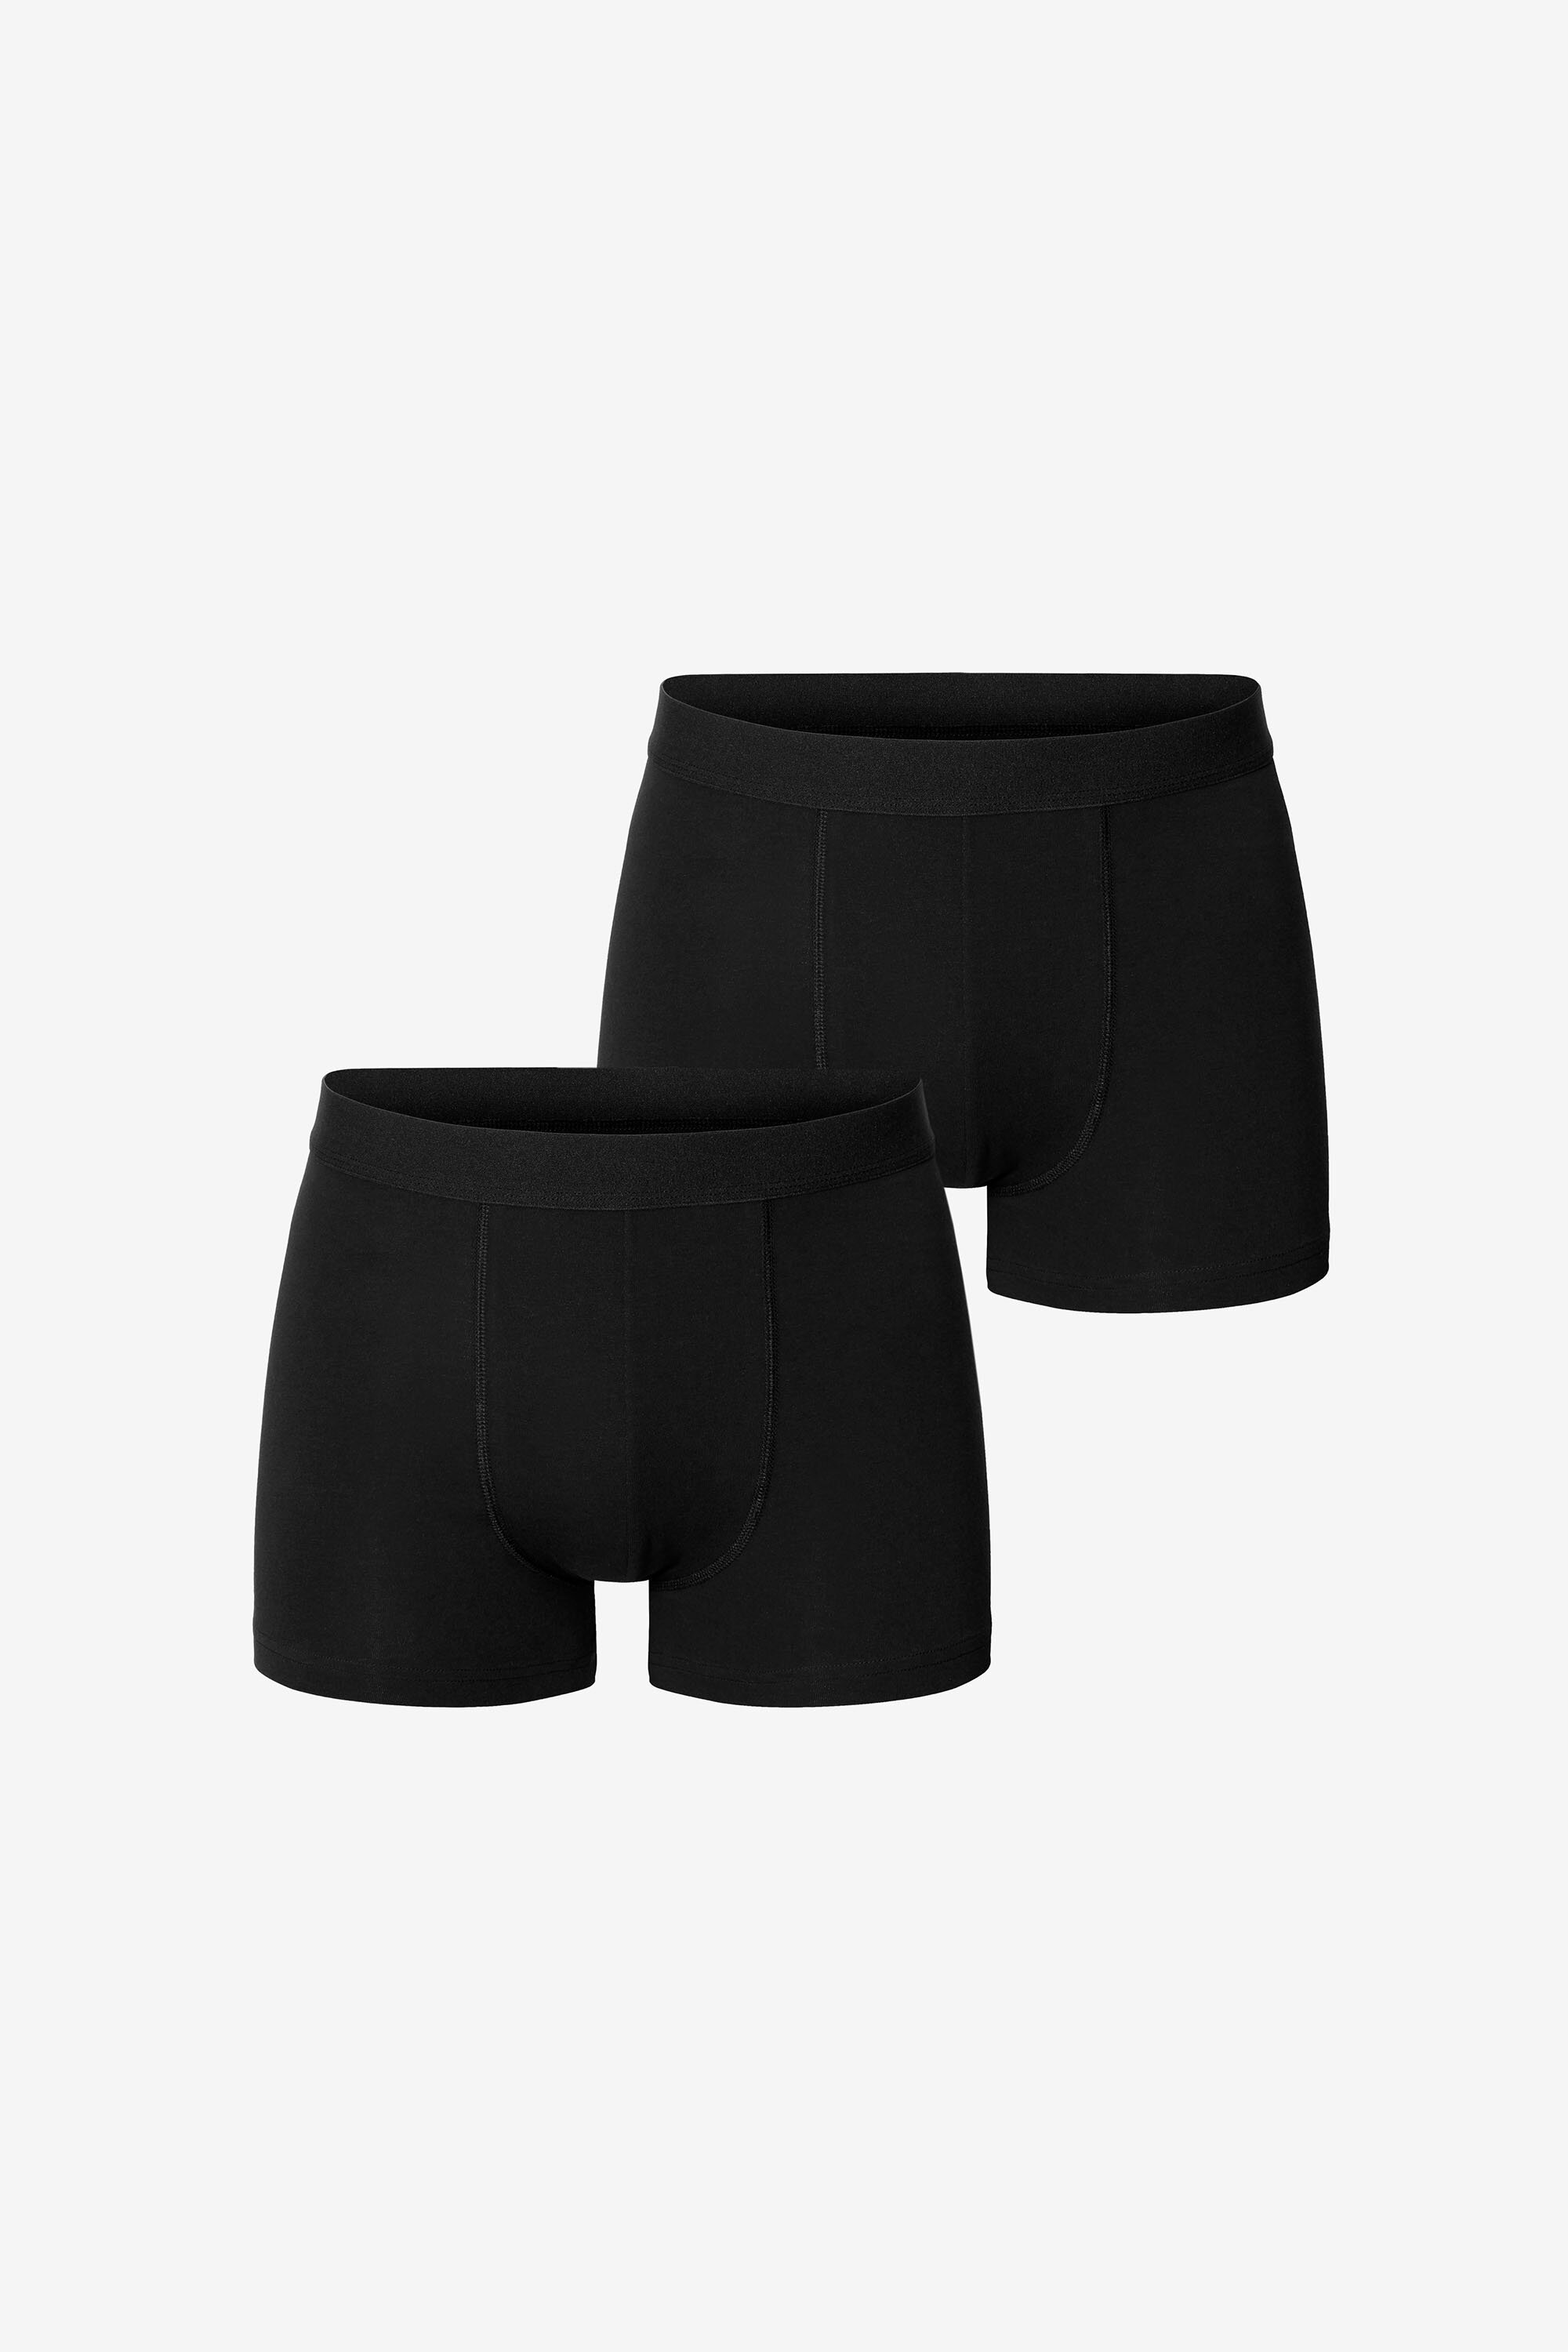 2 pack black Boxer Brief underpants modal - Bread & Boxers